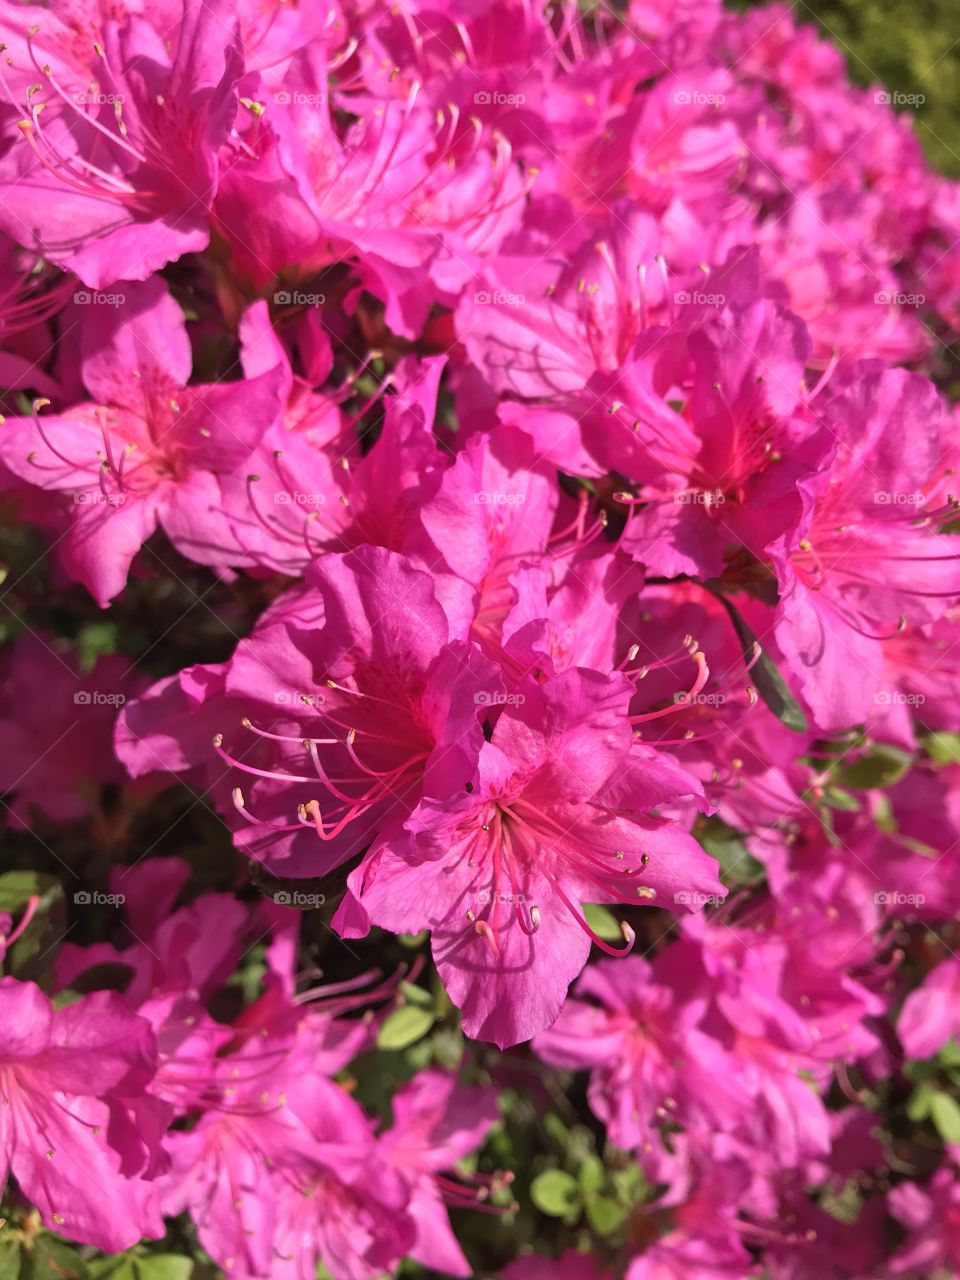 Flowers in my garden